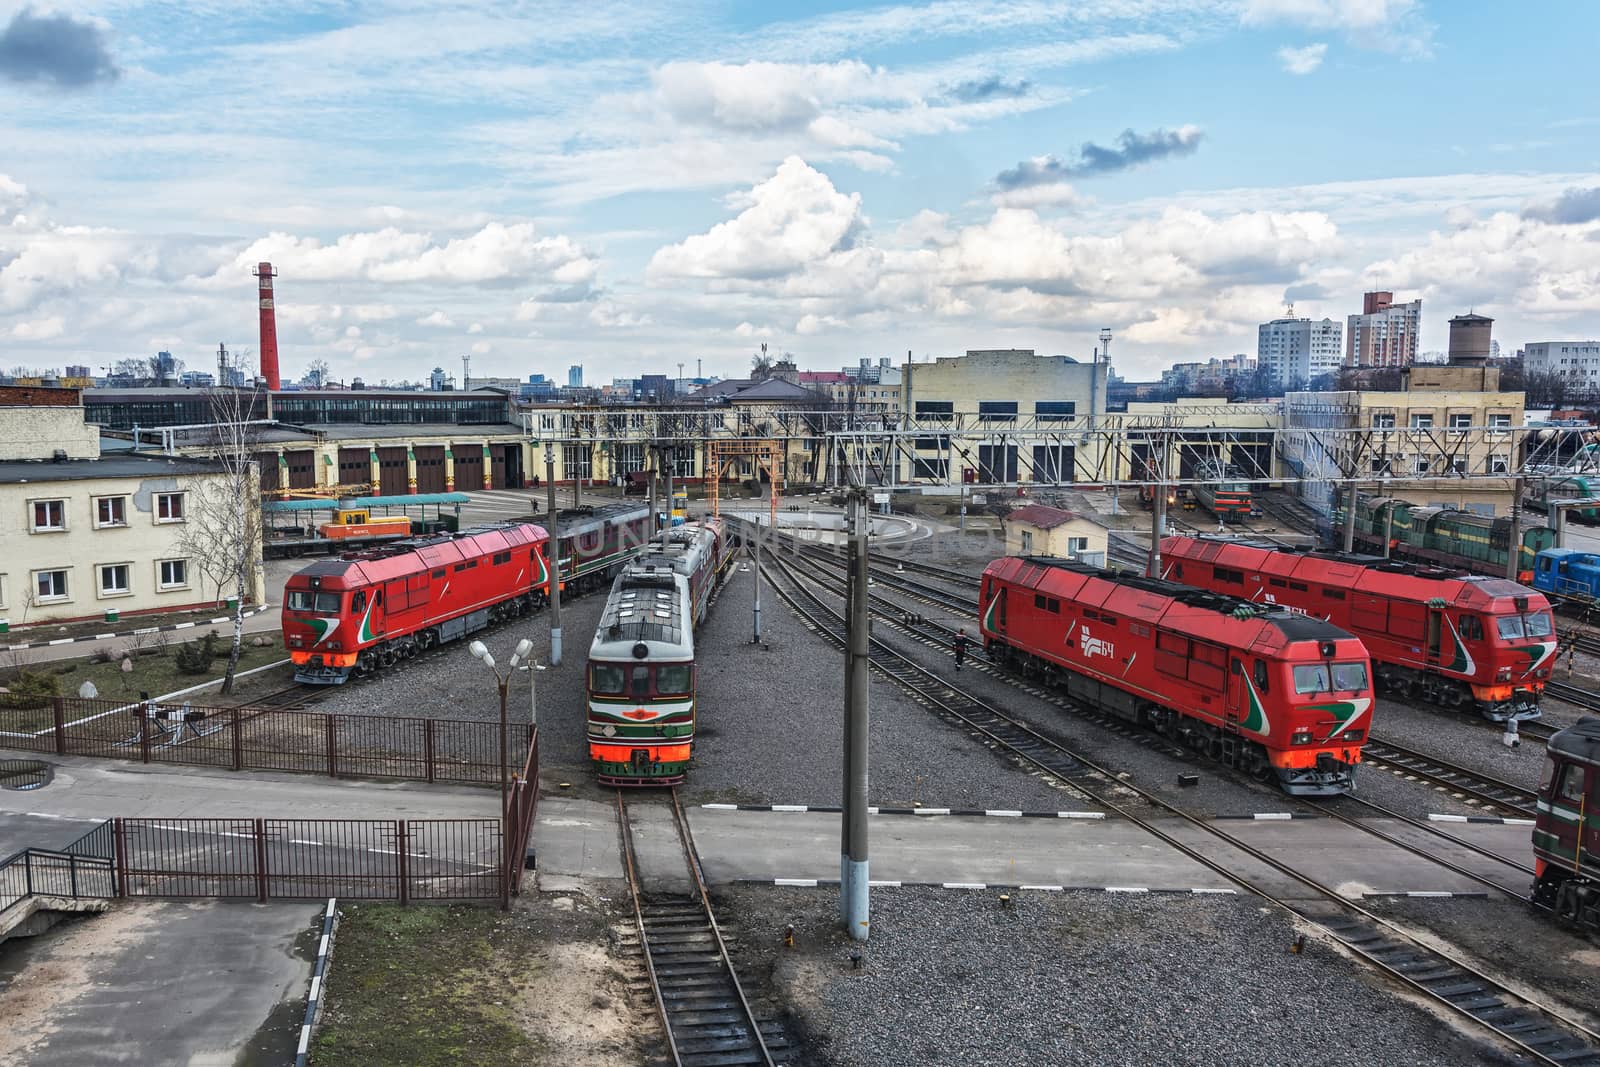 Diesel locomotives in the locomotive depot of the railway by Grommik